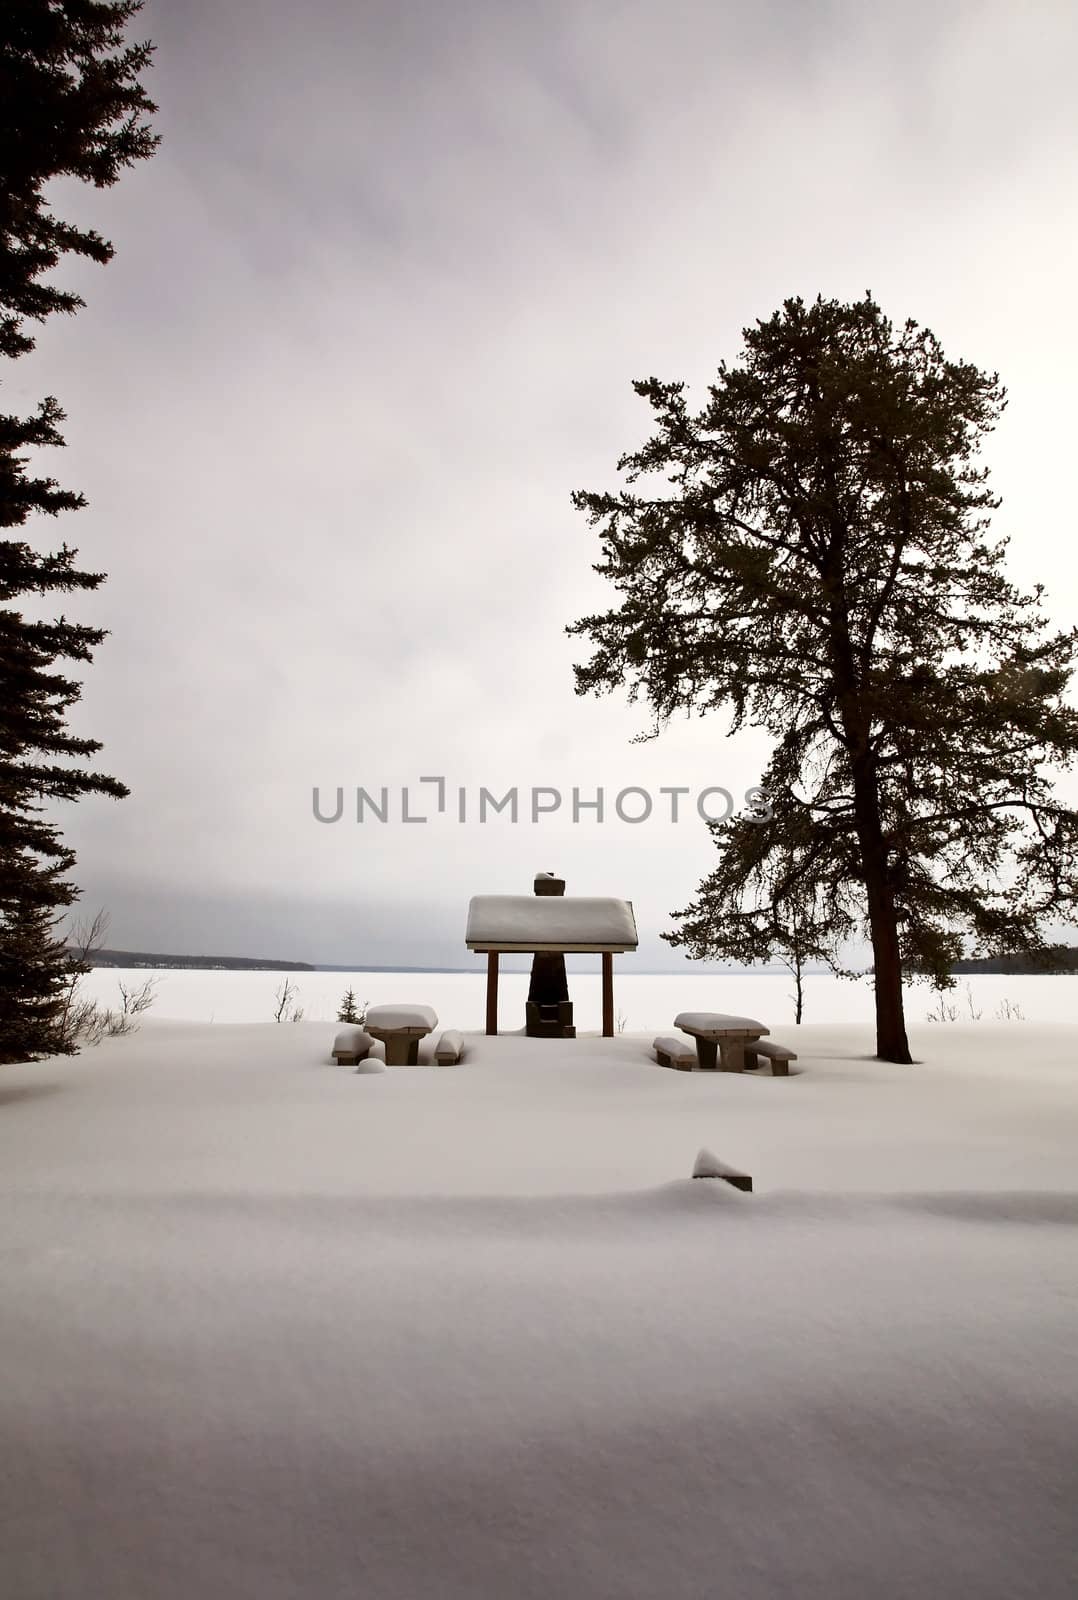 Picnic area in Winter Saskatchewan by pictureguy